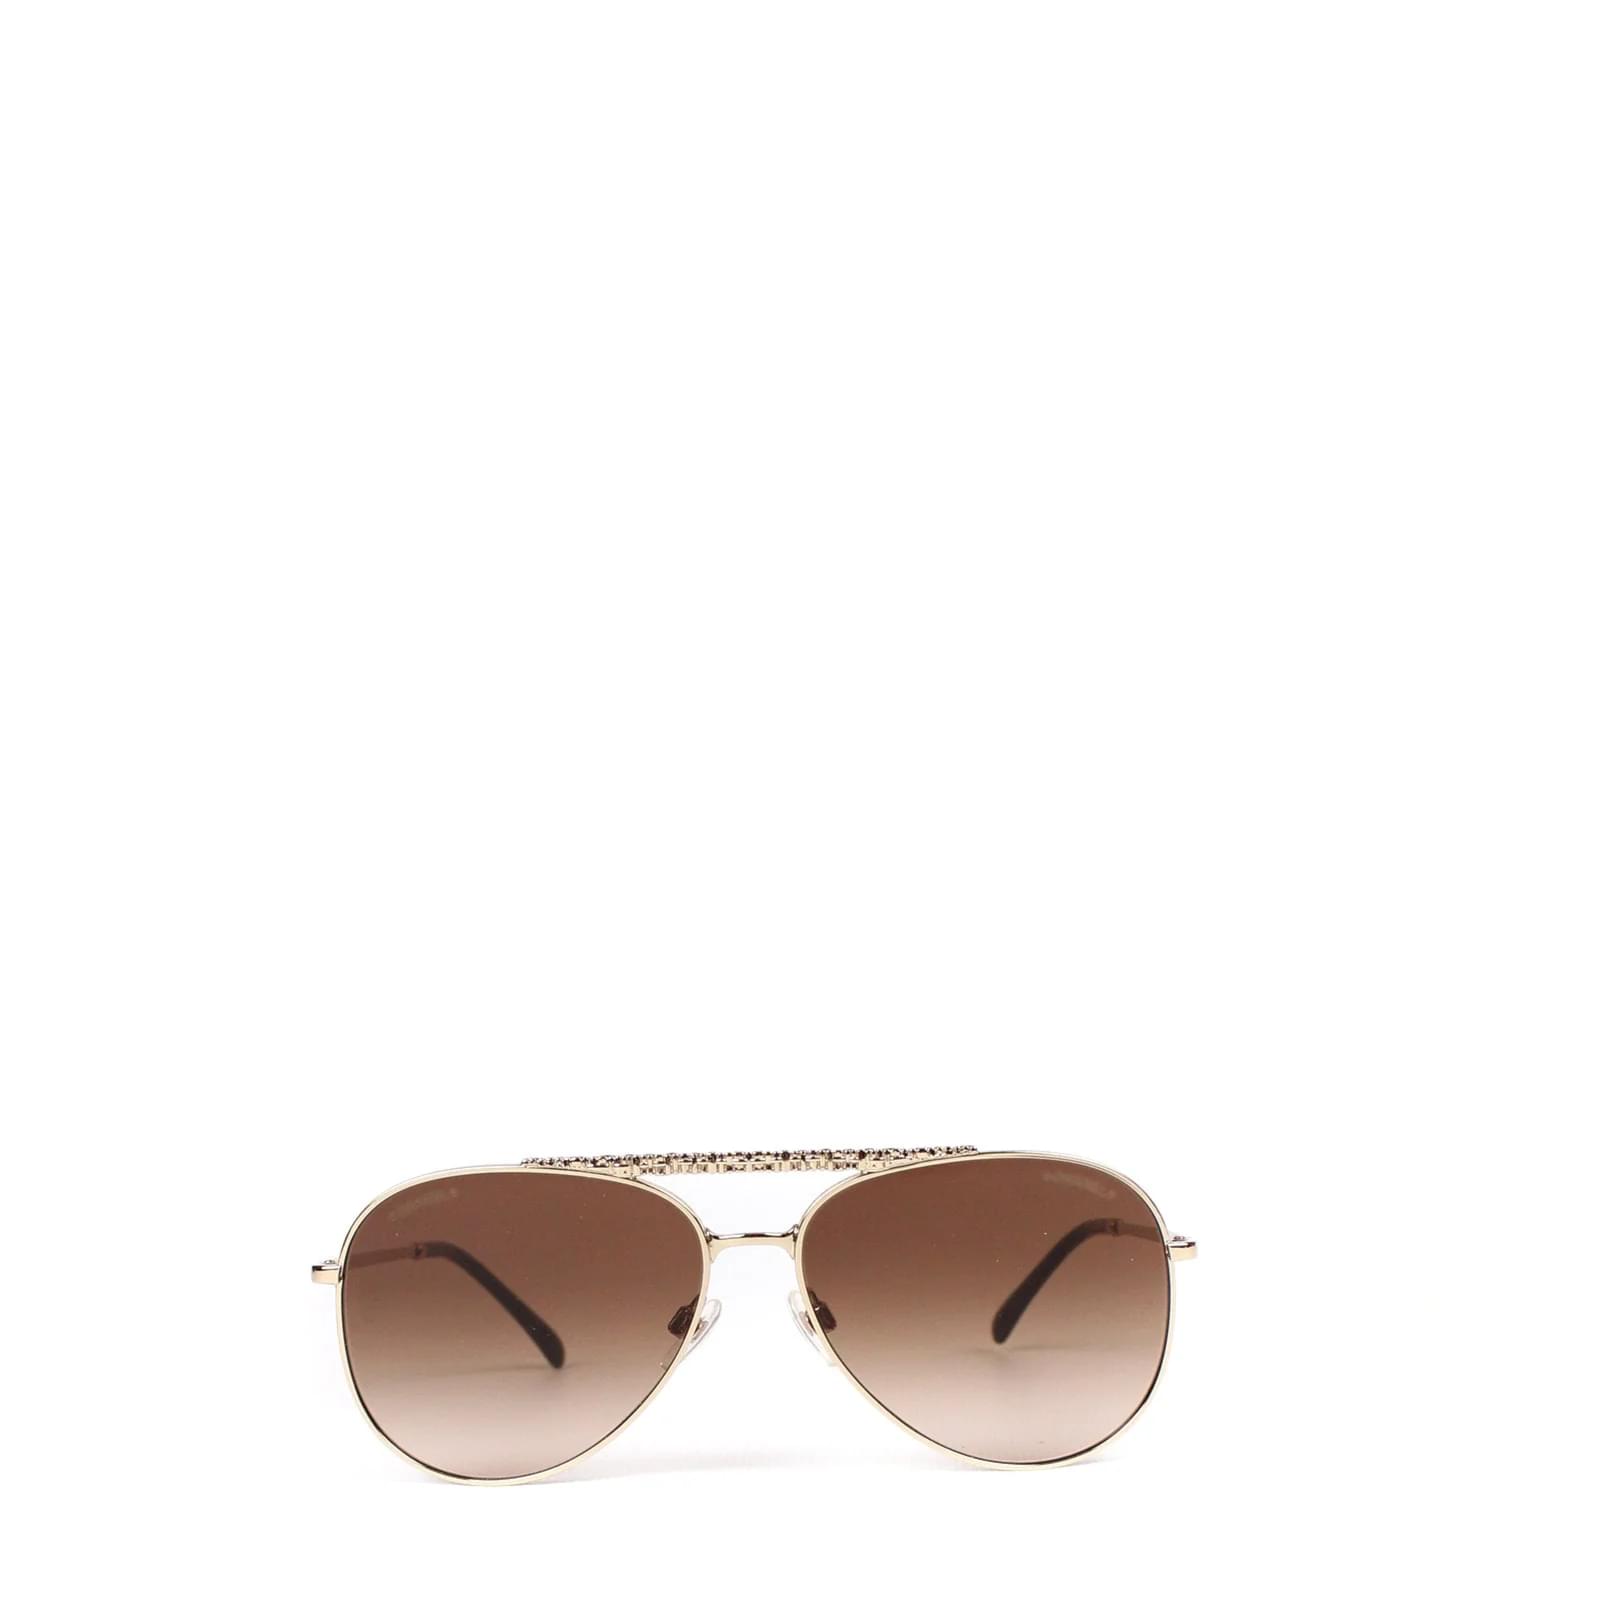 Chanel - Aviator sunglasses